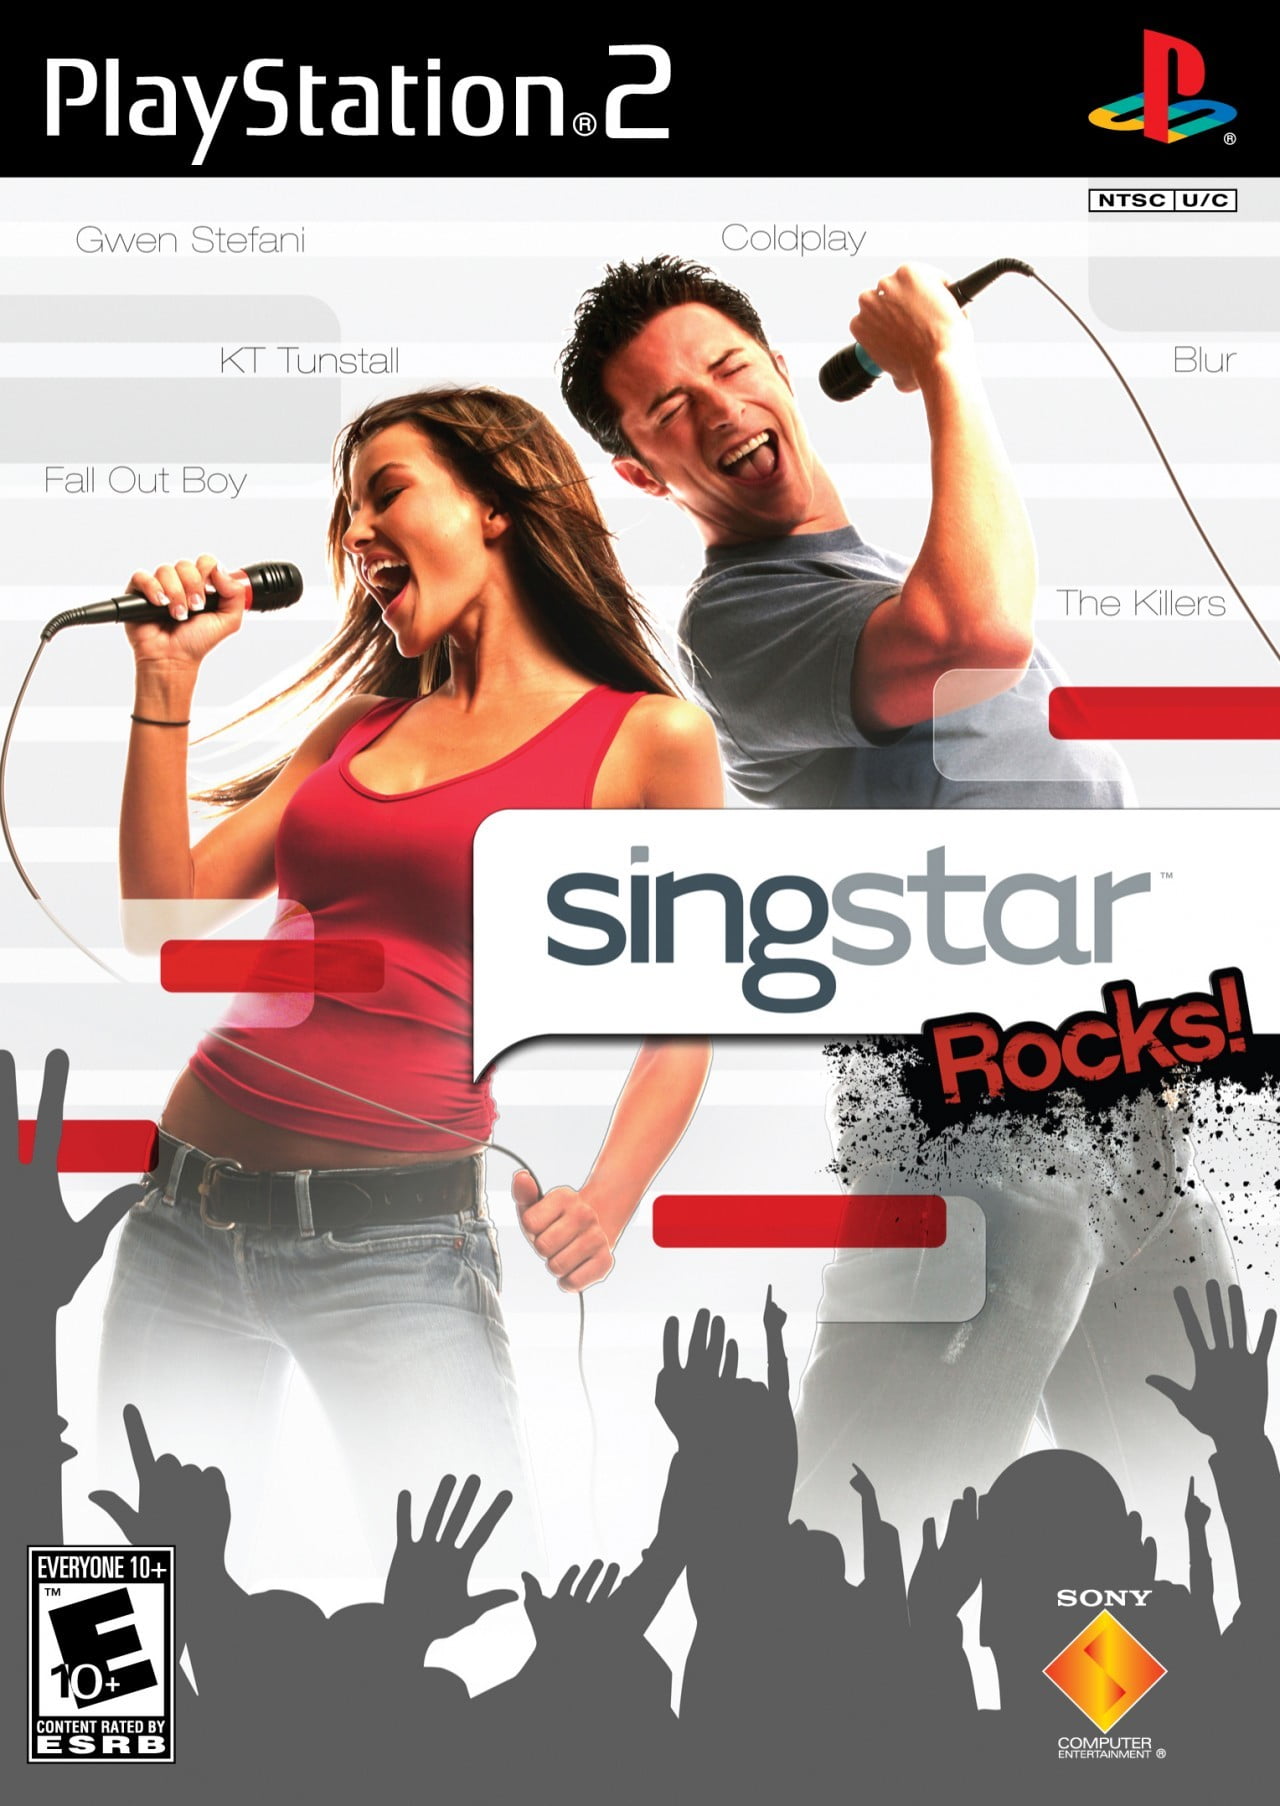  Singstar: Celebration - PlayStation 4 : Sony Interactive  Entertai: Video Games